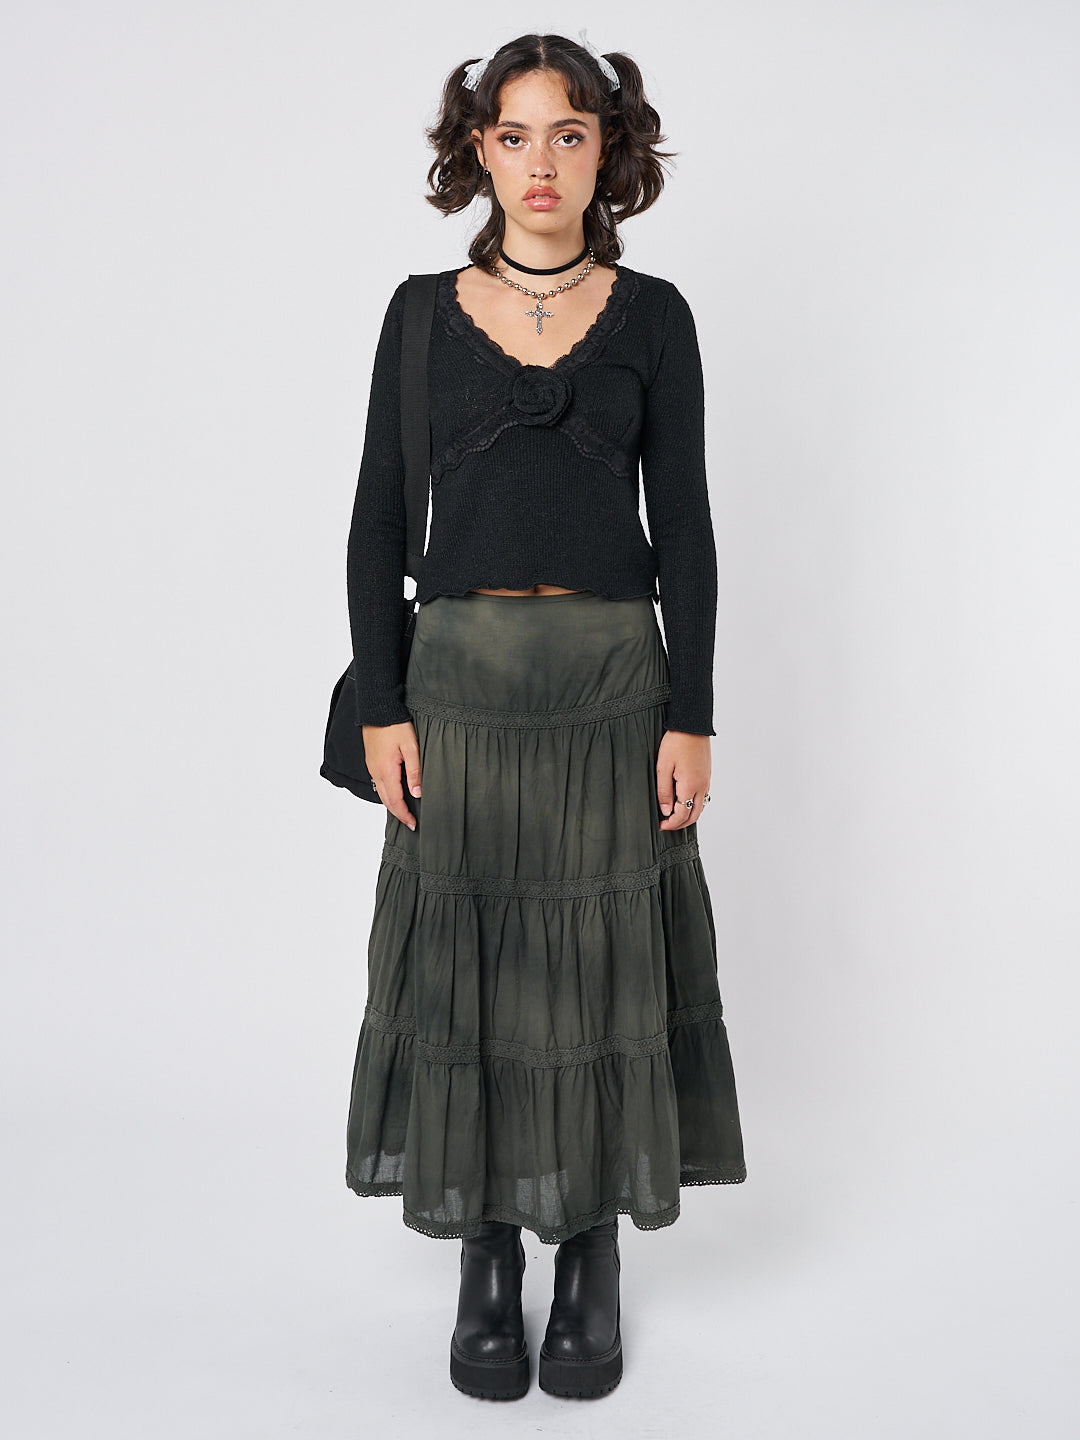 Ida Rose Black Knitted Top - Minga  US